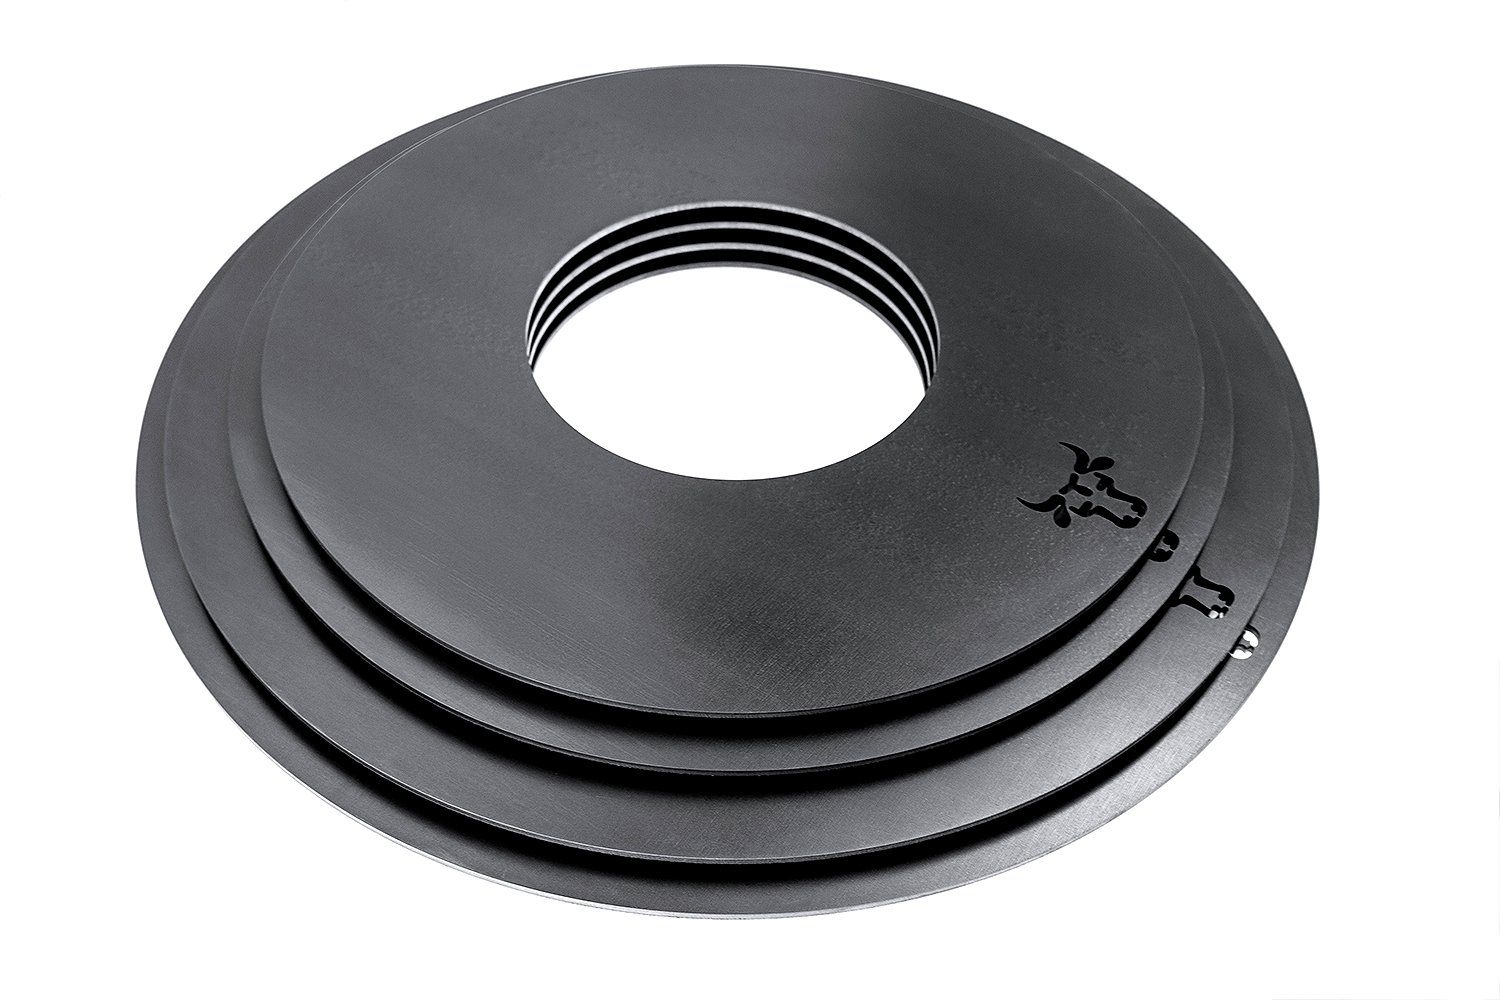 tuning-art Grillplatte GR01-45 Grillring Plancha für Kugelgrill Feuerplatte BBQ-Platte 45cm